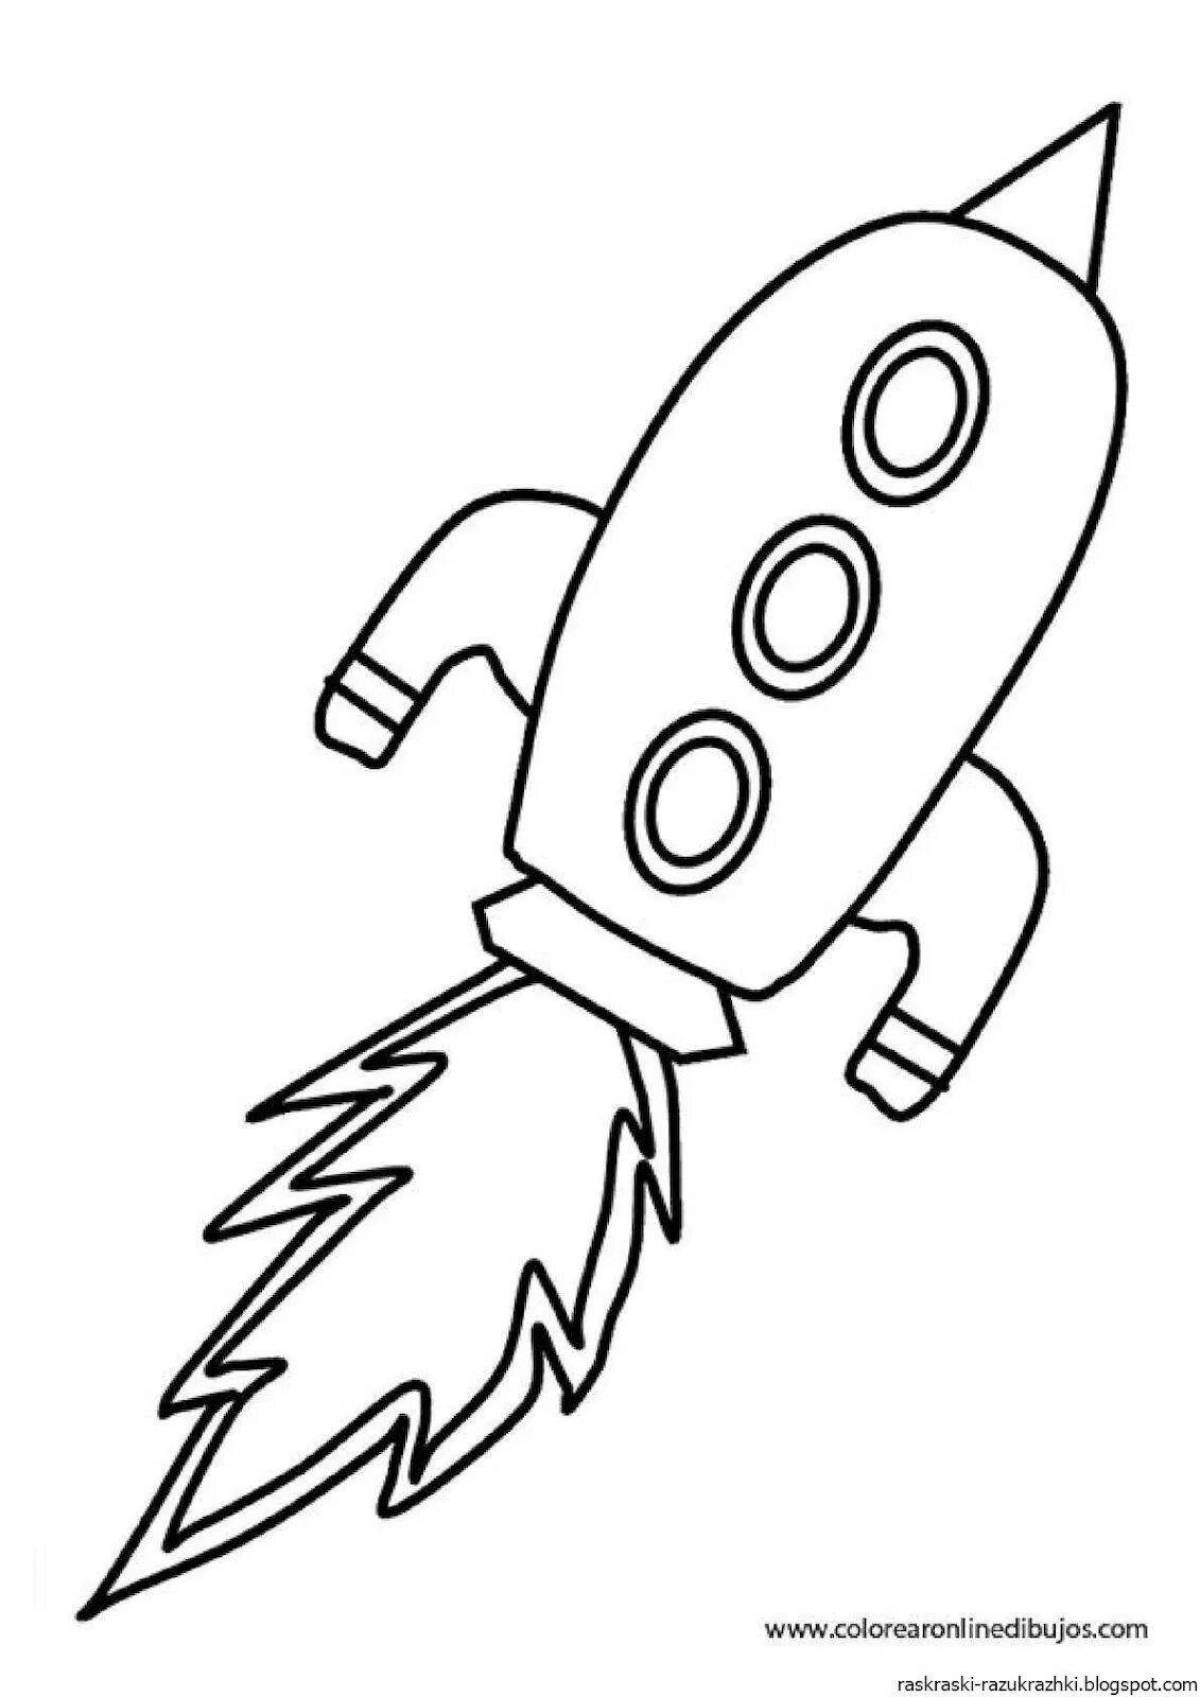 Раскраска lovely rocket для детей 5-6 лет